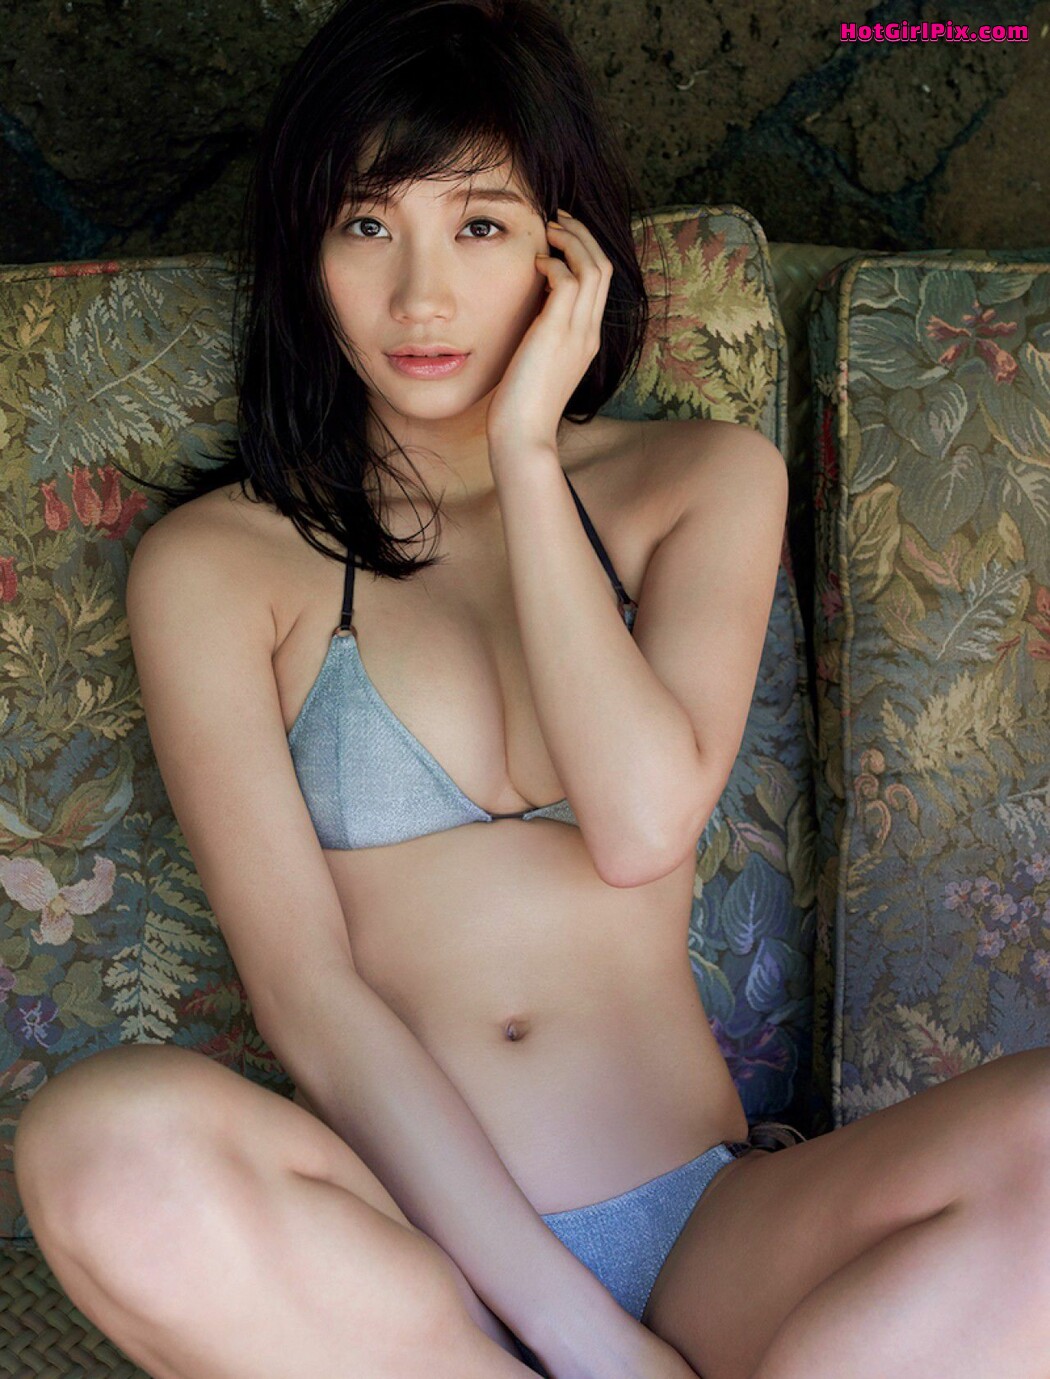 [FRIDAY] Yuka Ogura - I want to see more! Cover Photo